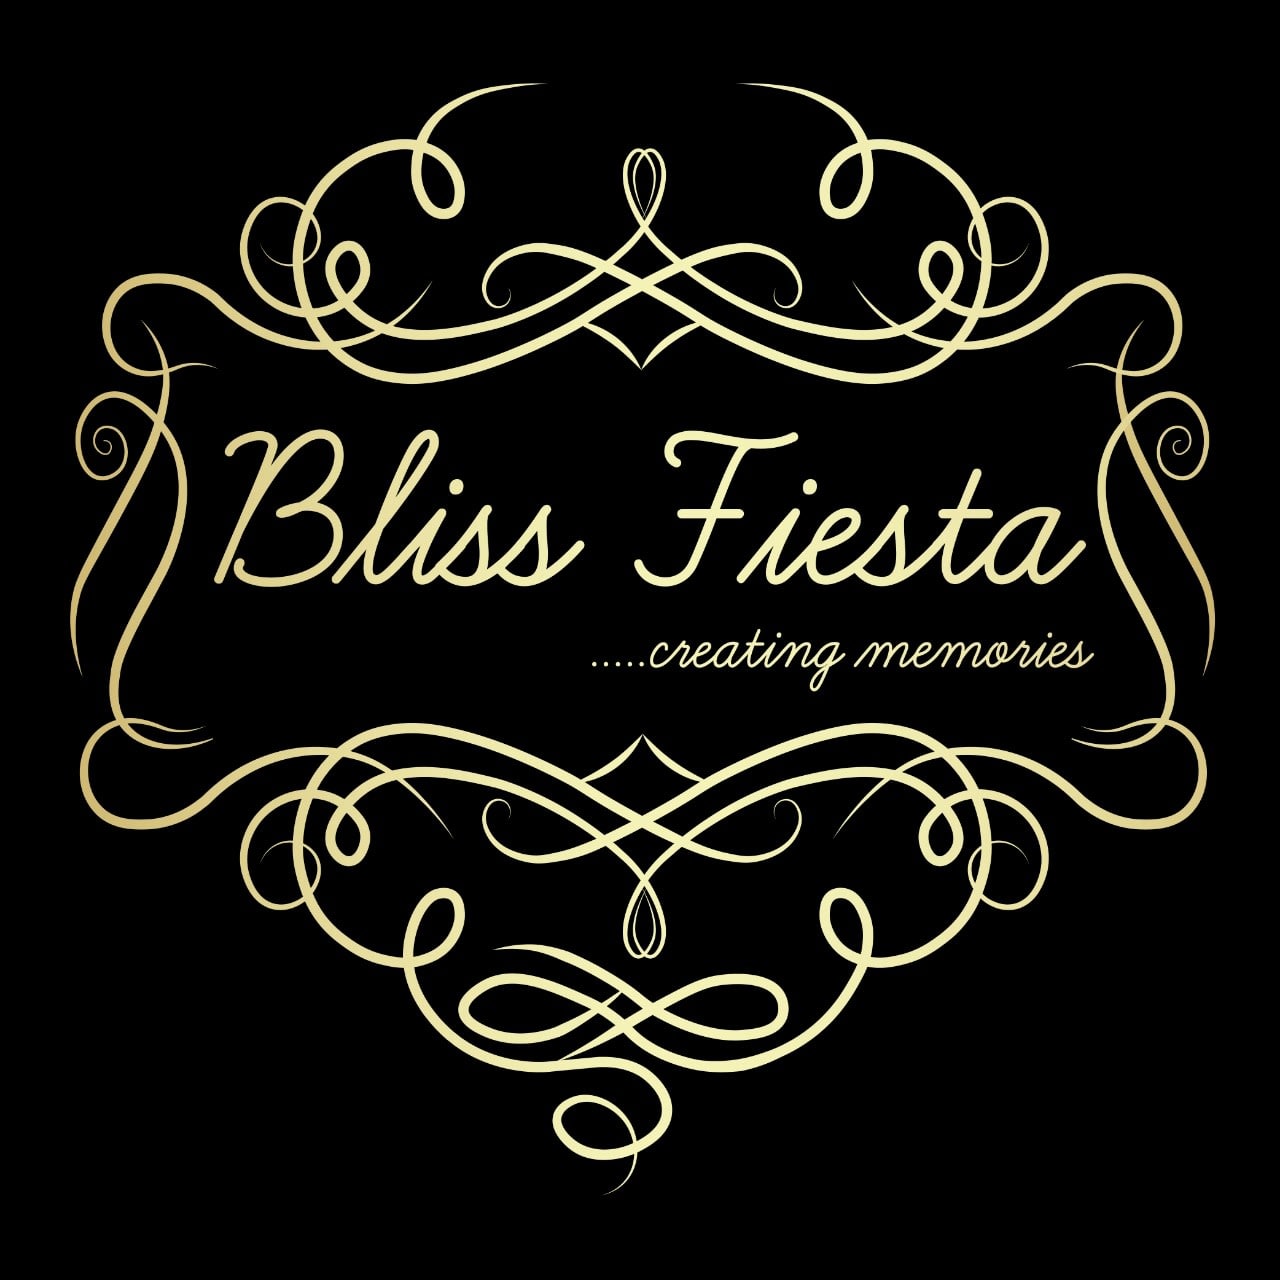 Bliss Fiesta